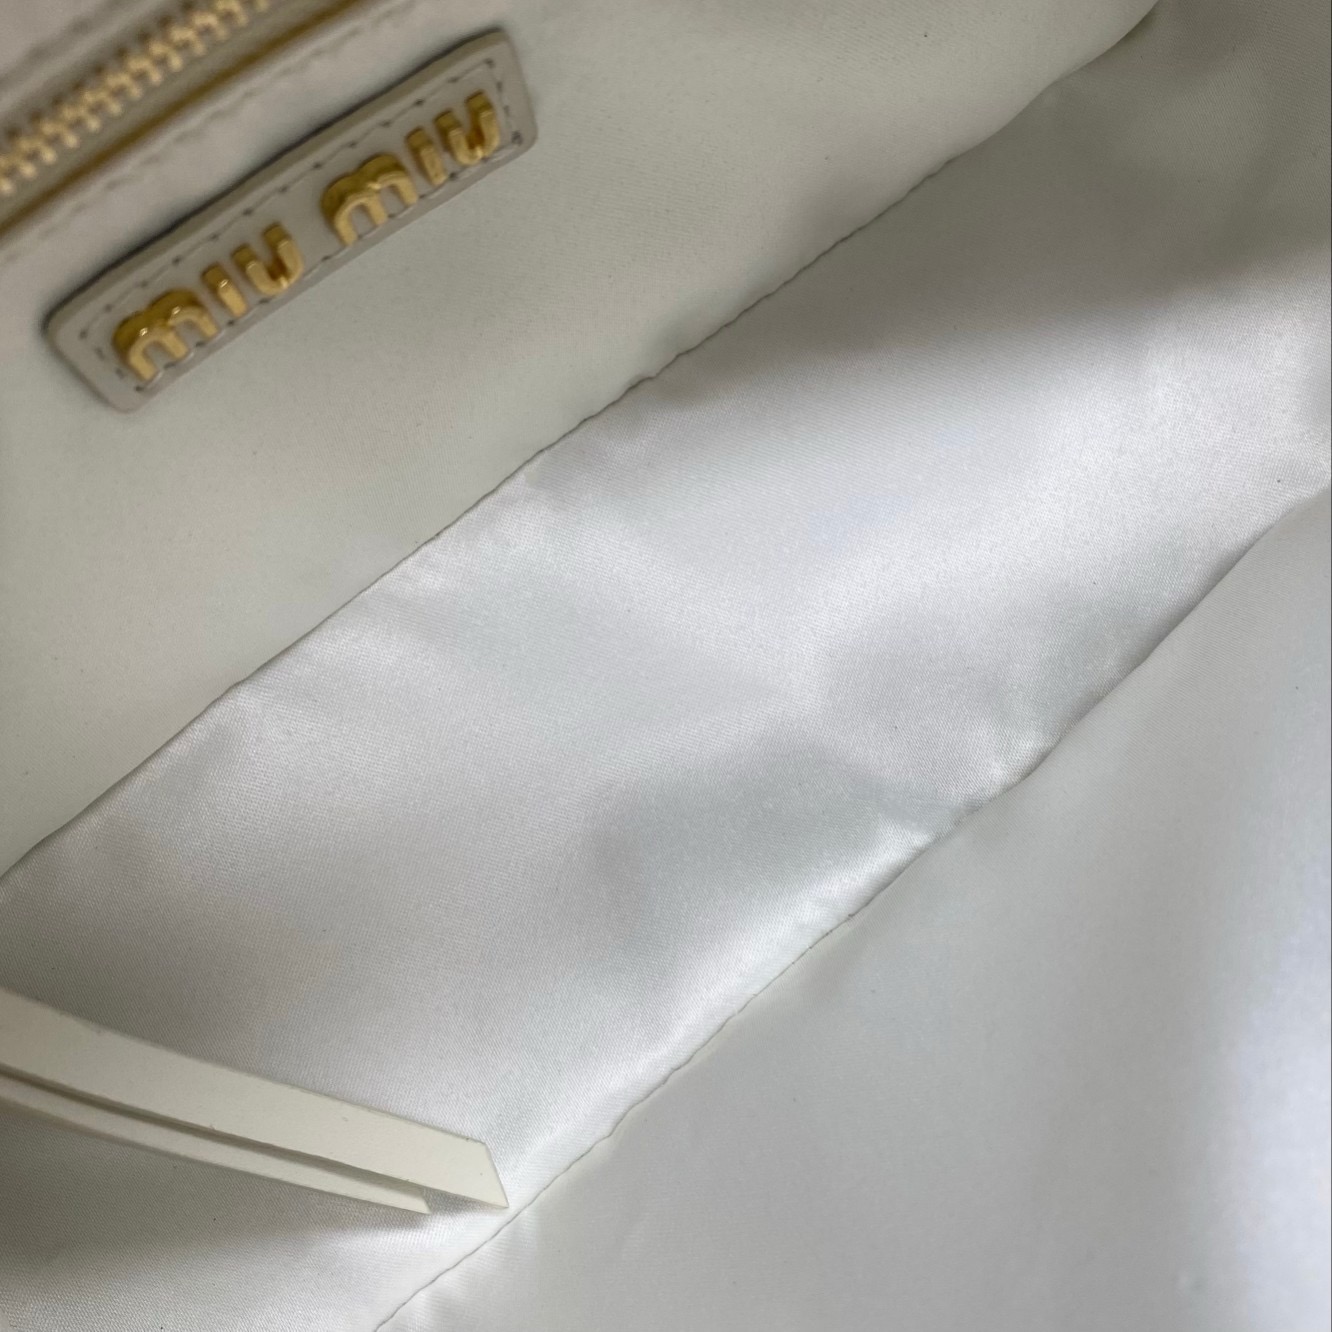 MIU MIU Original Leather Top Handle Bag 5BB147 WHITE